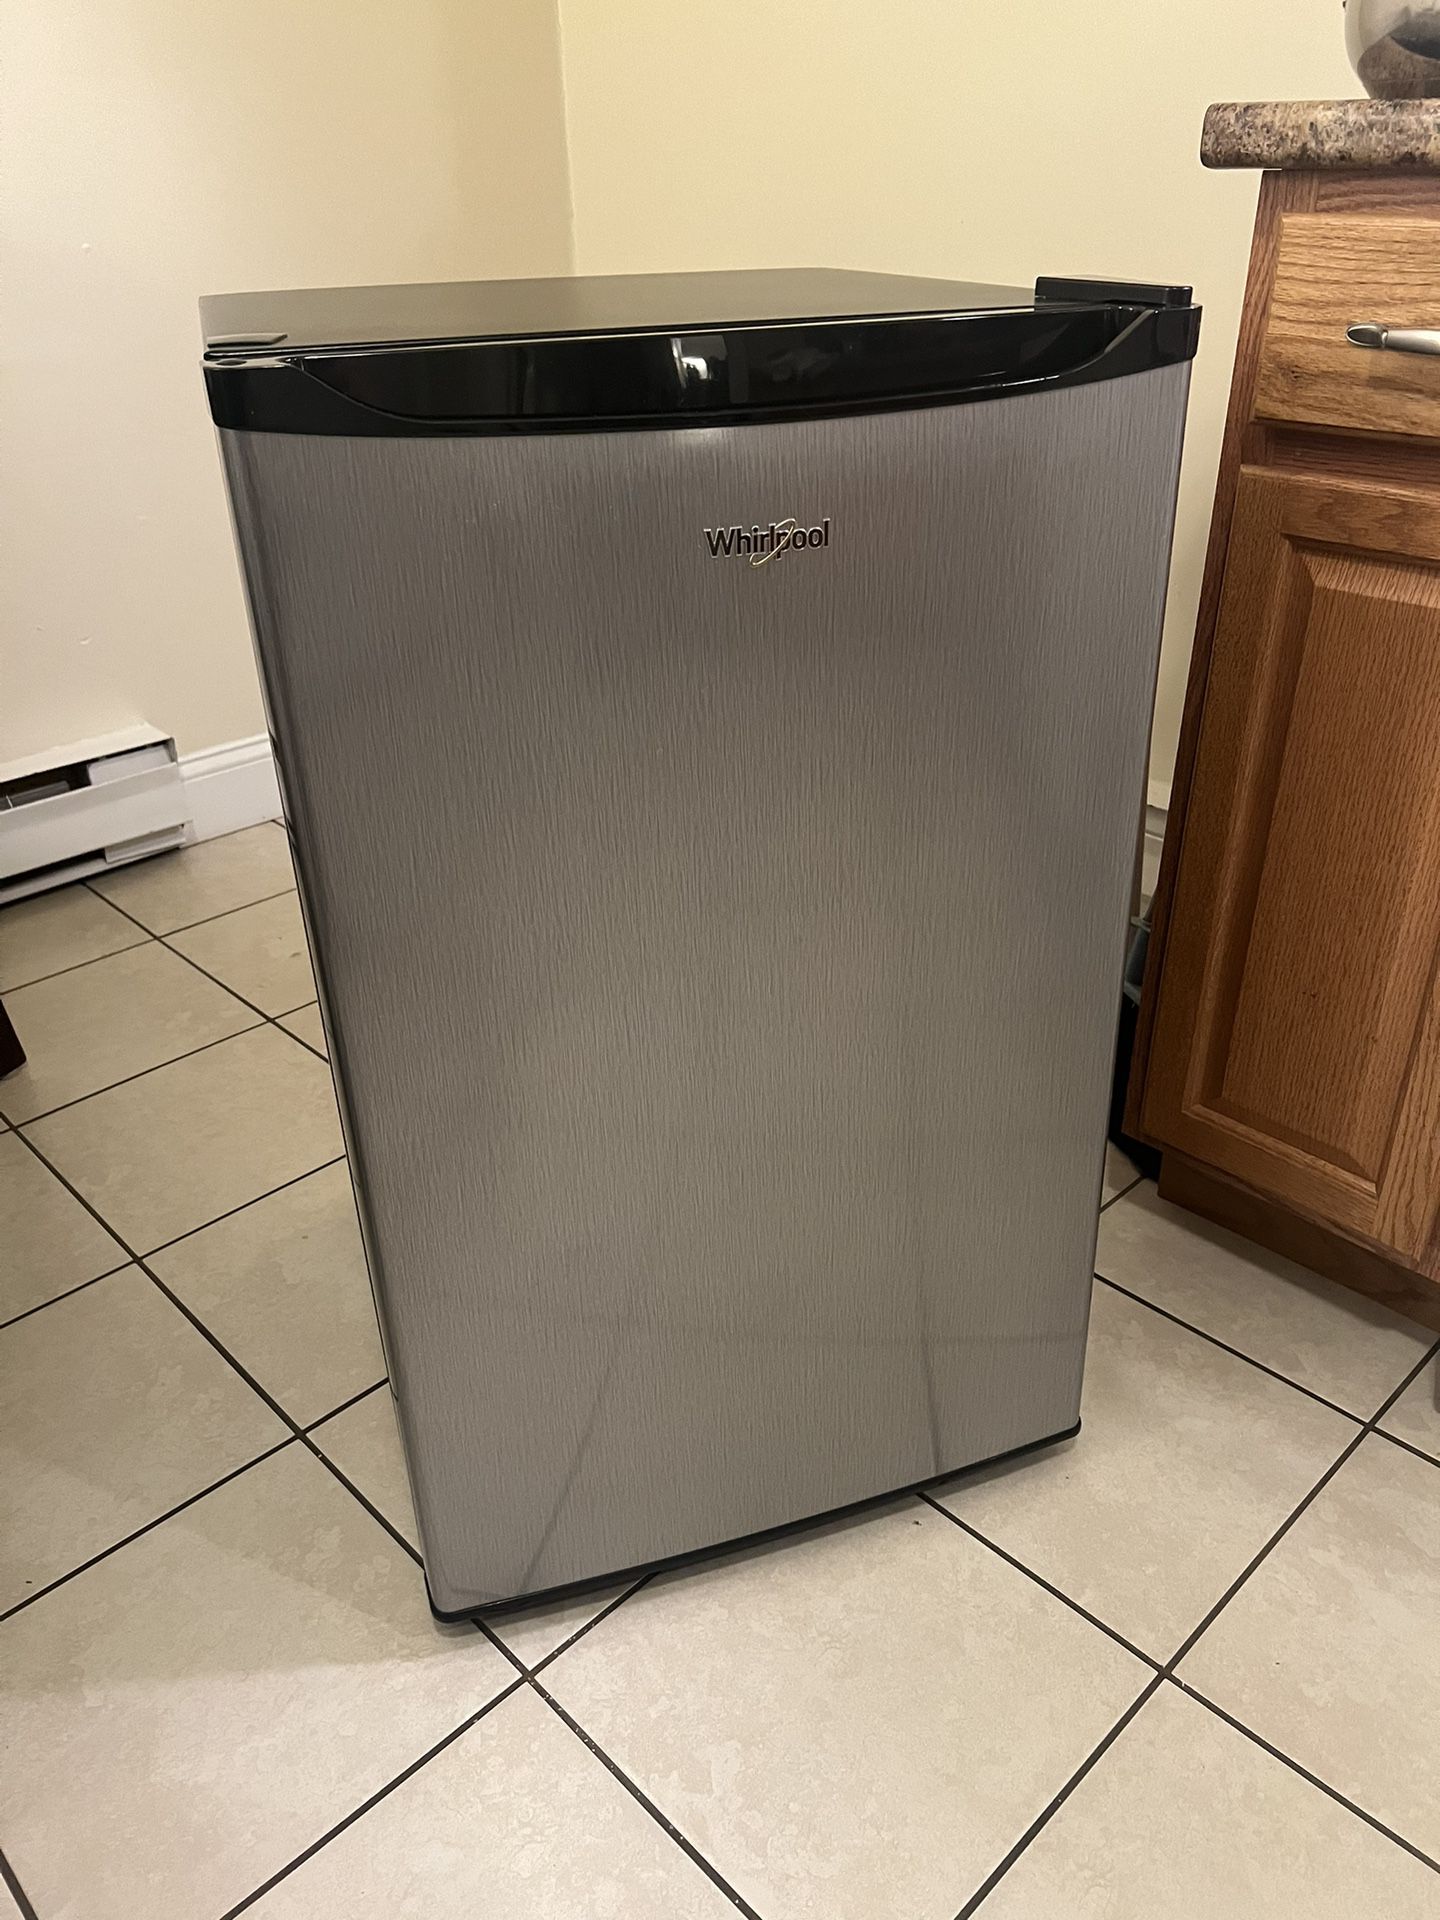 Whirlpool 4.3 cu ft Mini Refrigerator Stainless Steel